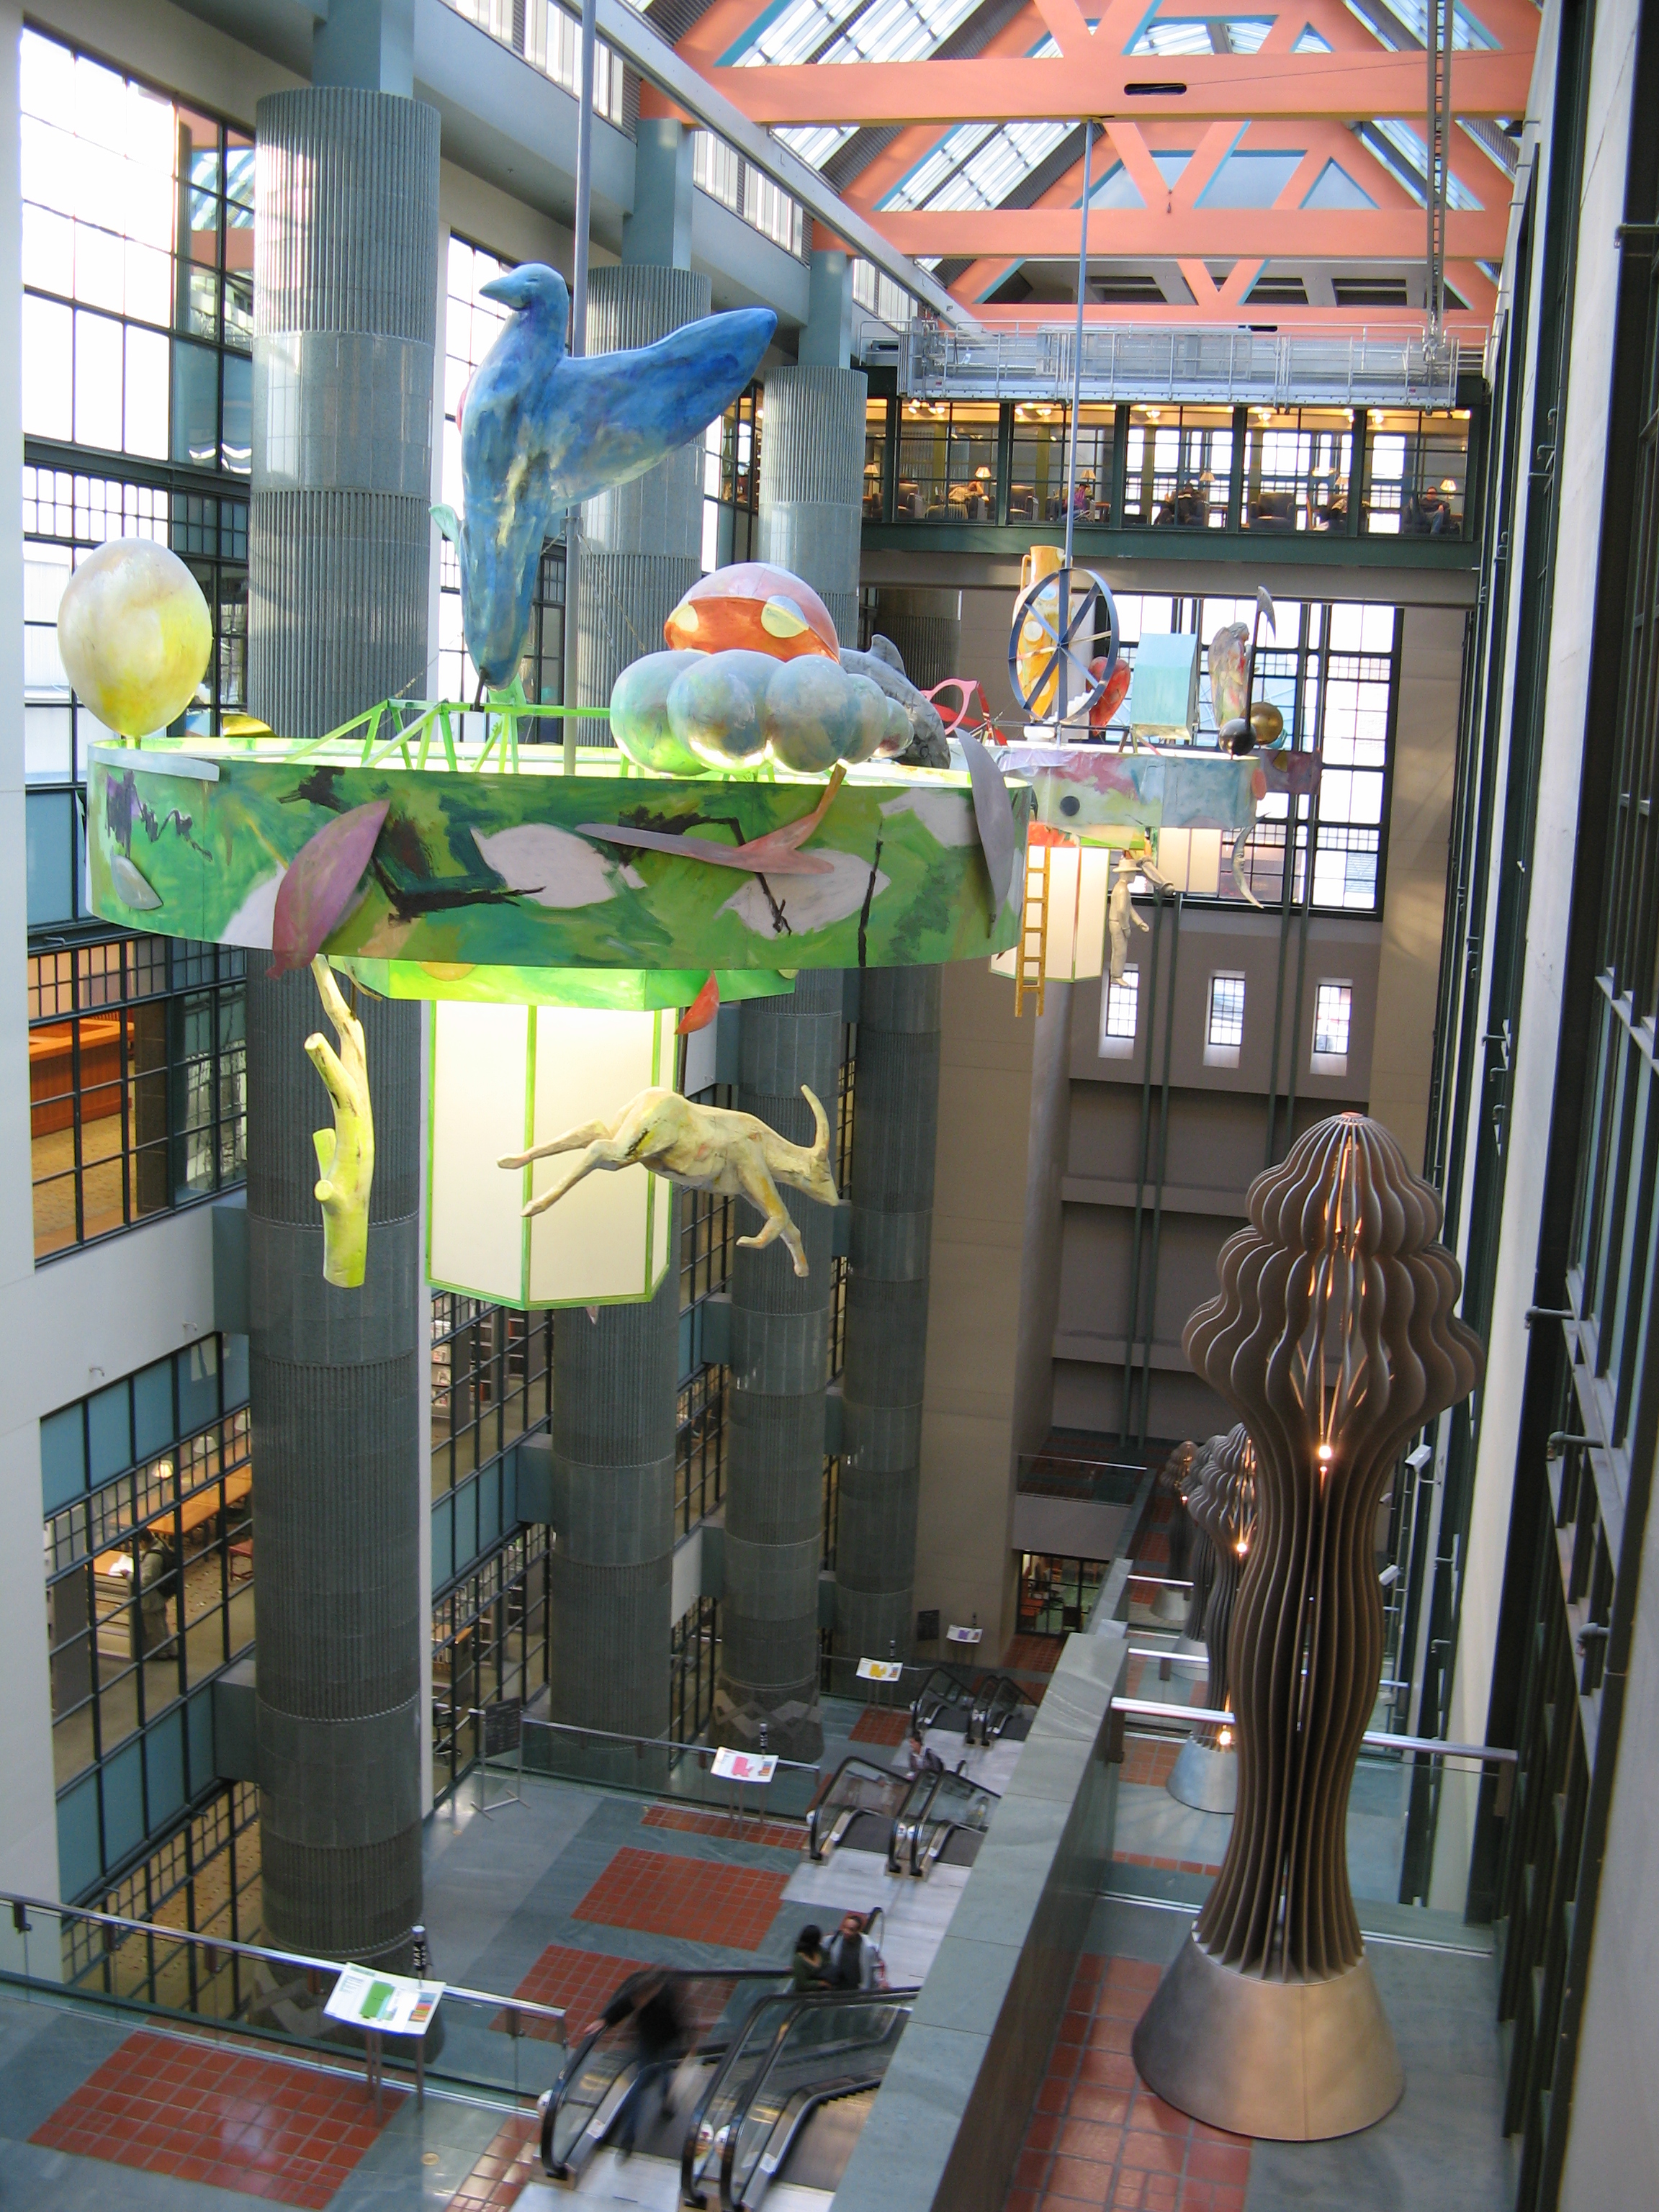 File:Interior of LA Central Library.jpg - Wikimedia Commons